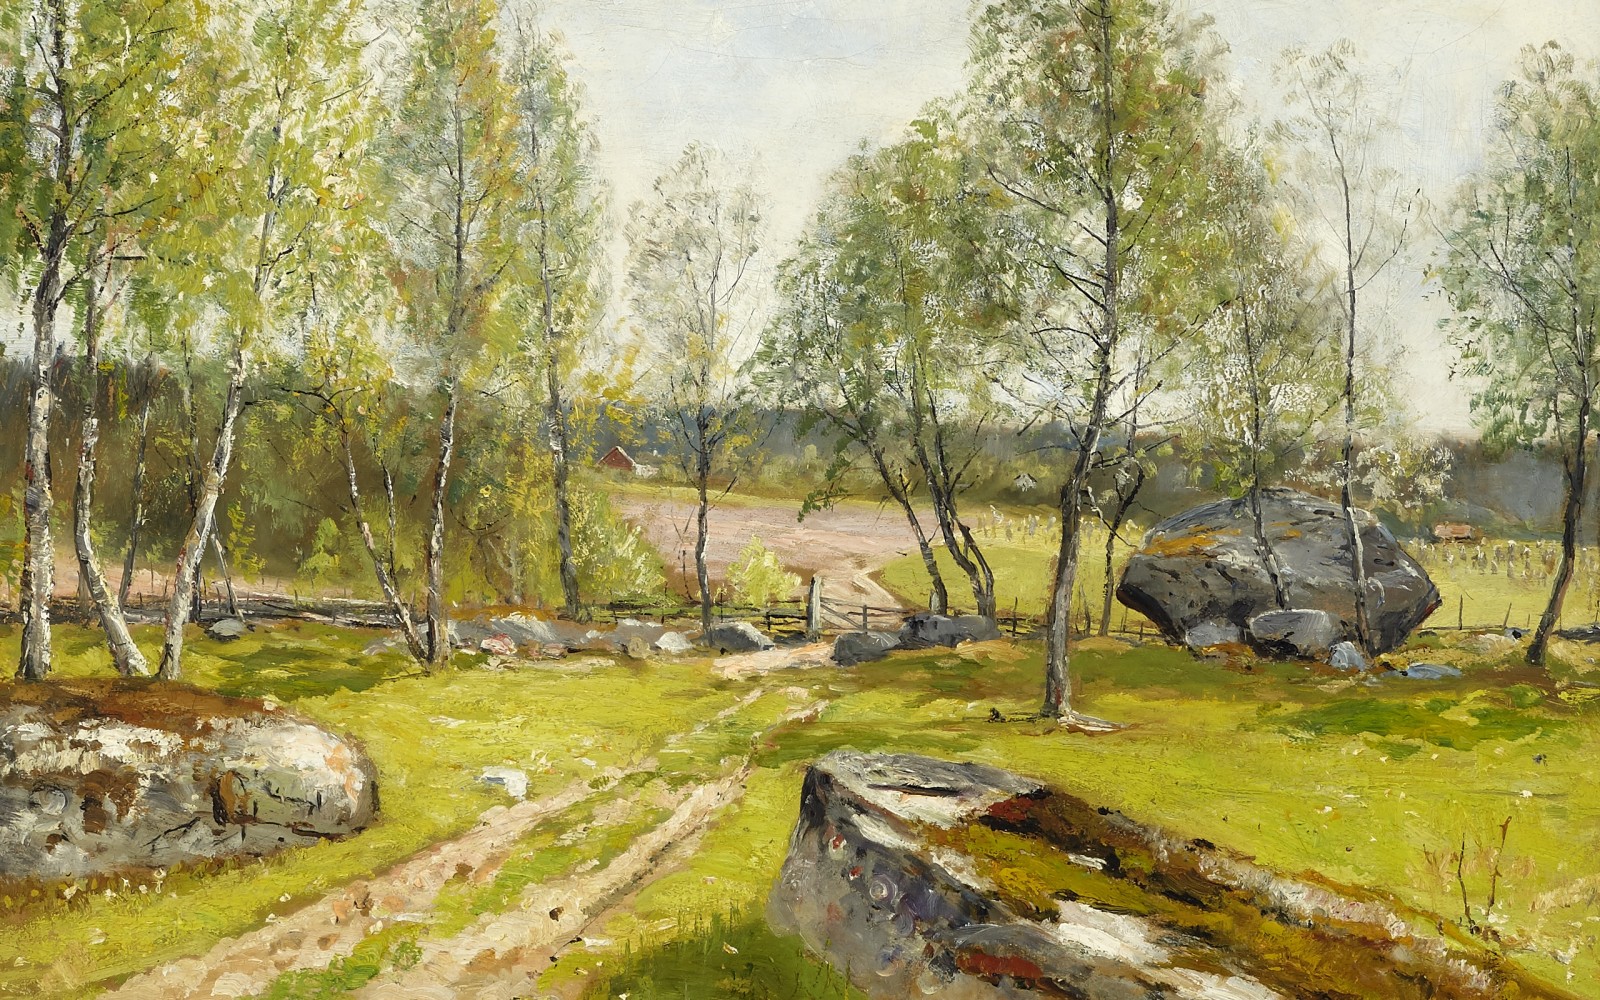 1900, Artis Swedia, Pelukis Swedia, Olof Hermelin, Birch di halaman, Pohon birch di pagar, Birch di halaman